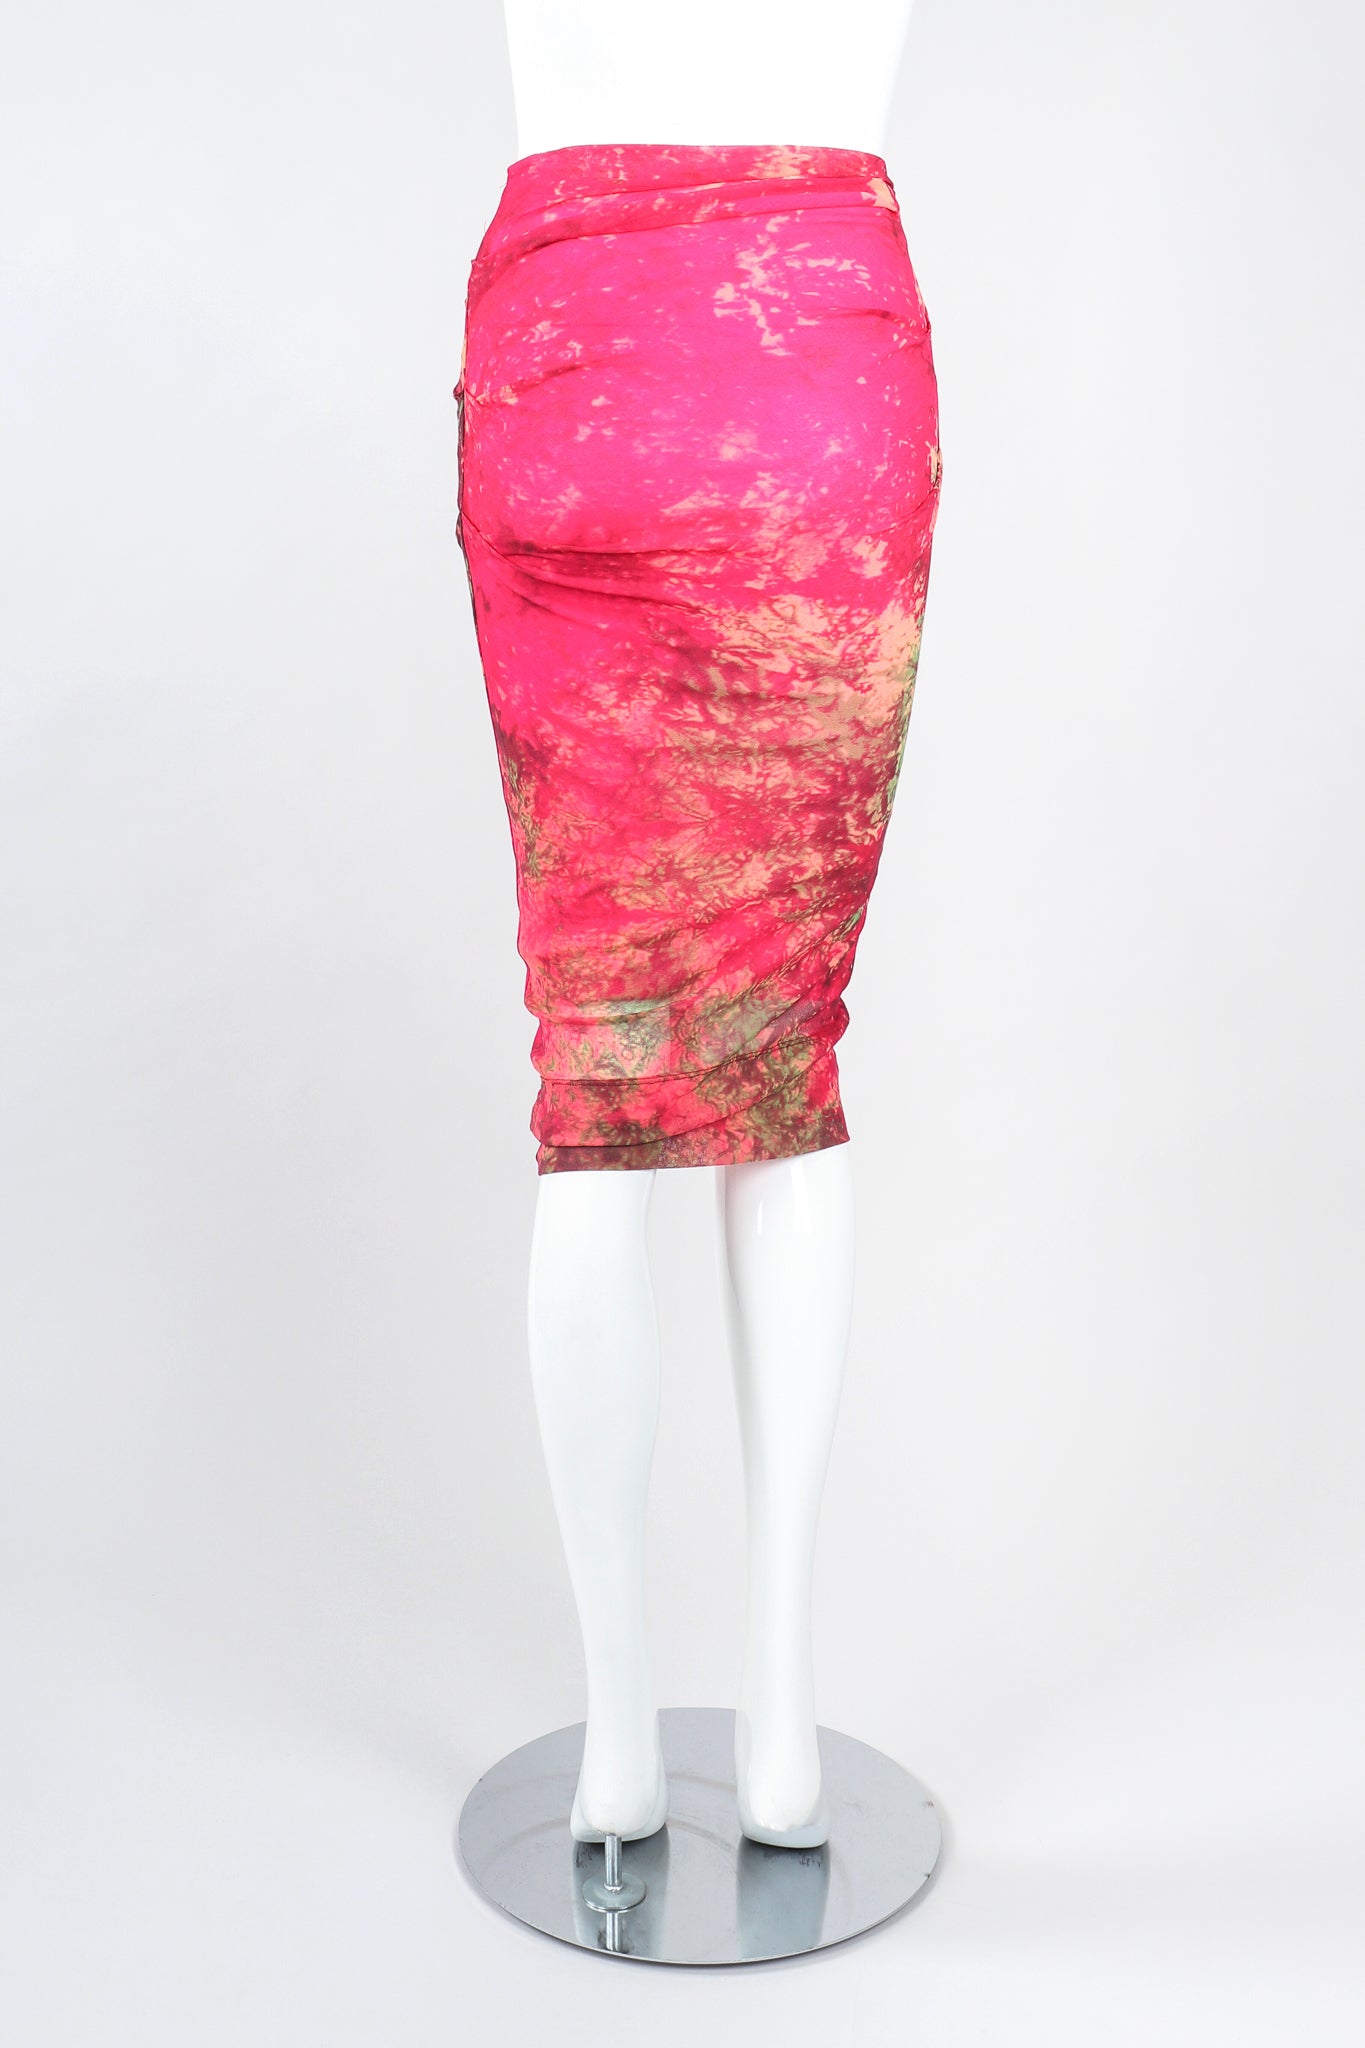 Recess Designer Consignment Vintage Plein Sud Bodycon Sheer Mesh Top & Skirt Set Outfit Ensemble Los Angeles Resale